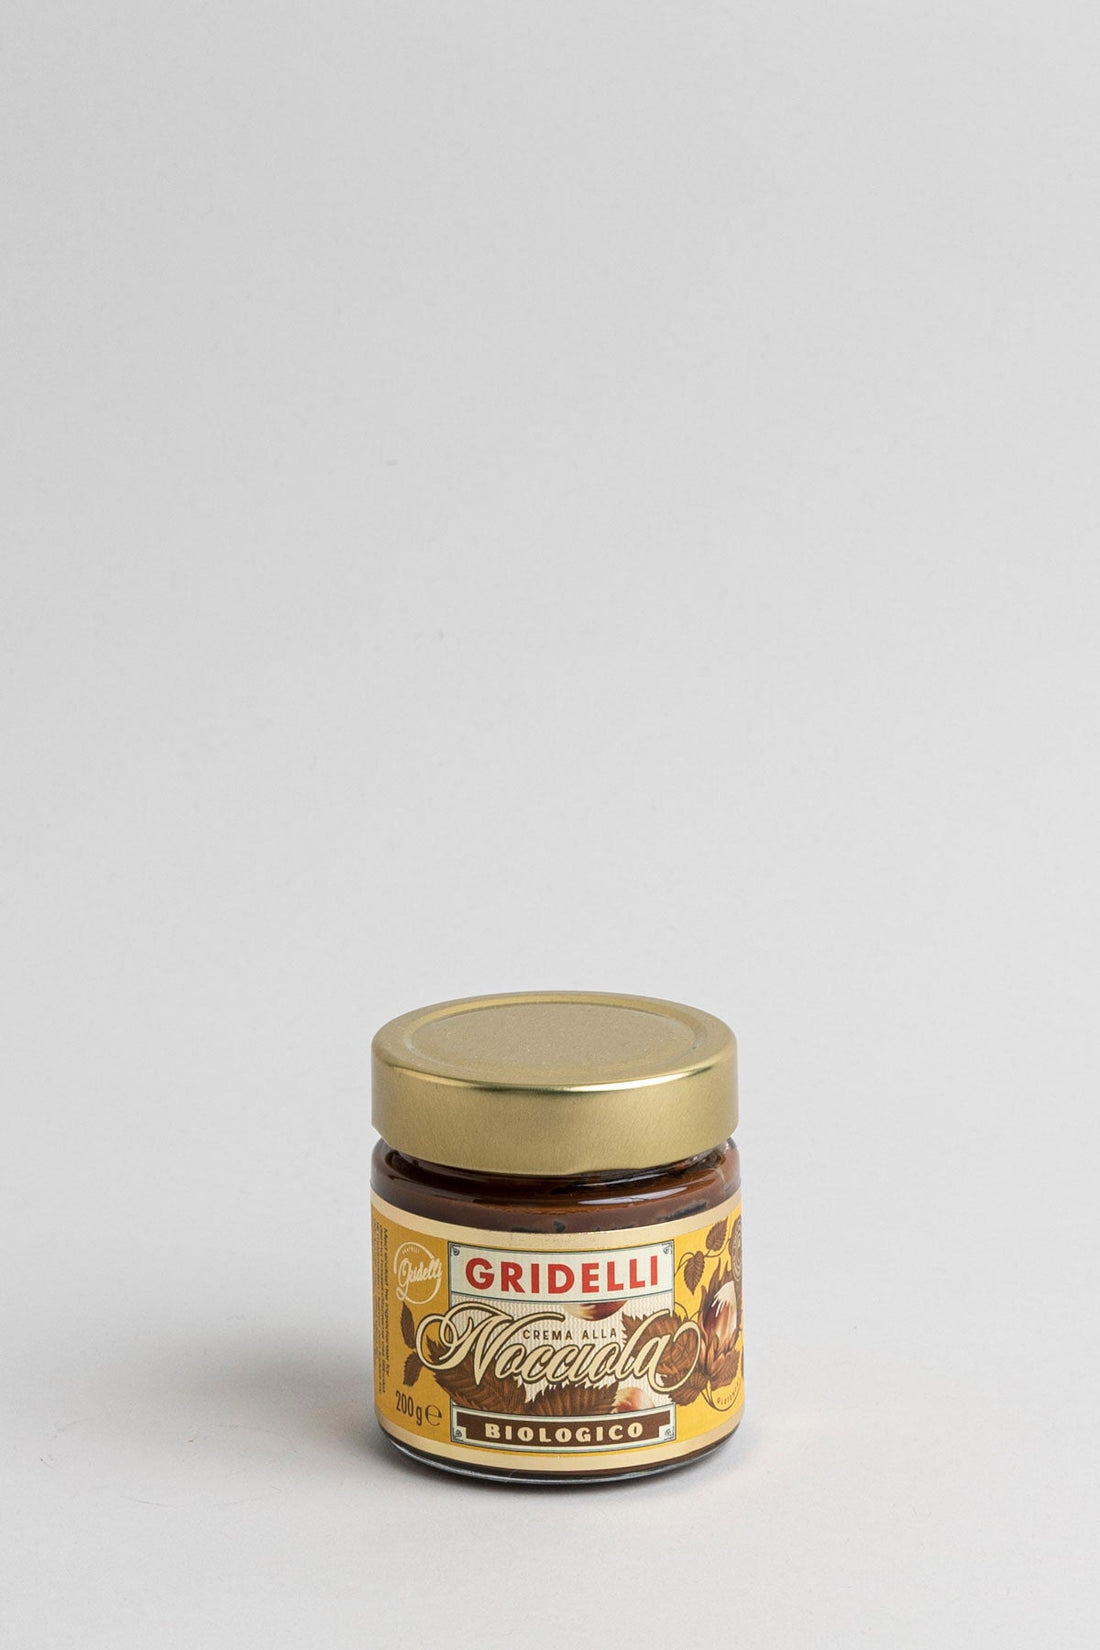 Gridelli Nocciola hasselnøtt/sjokoladepåleggg